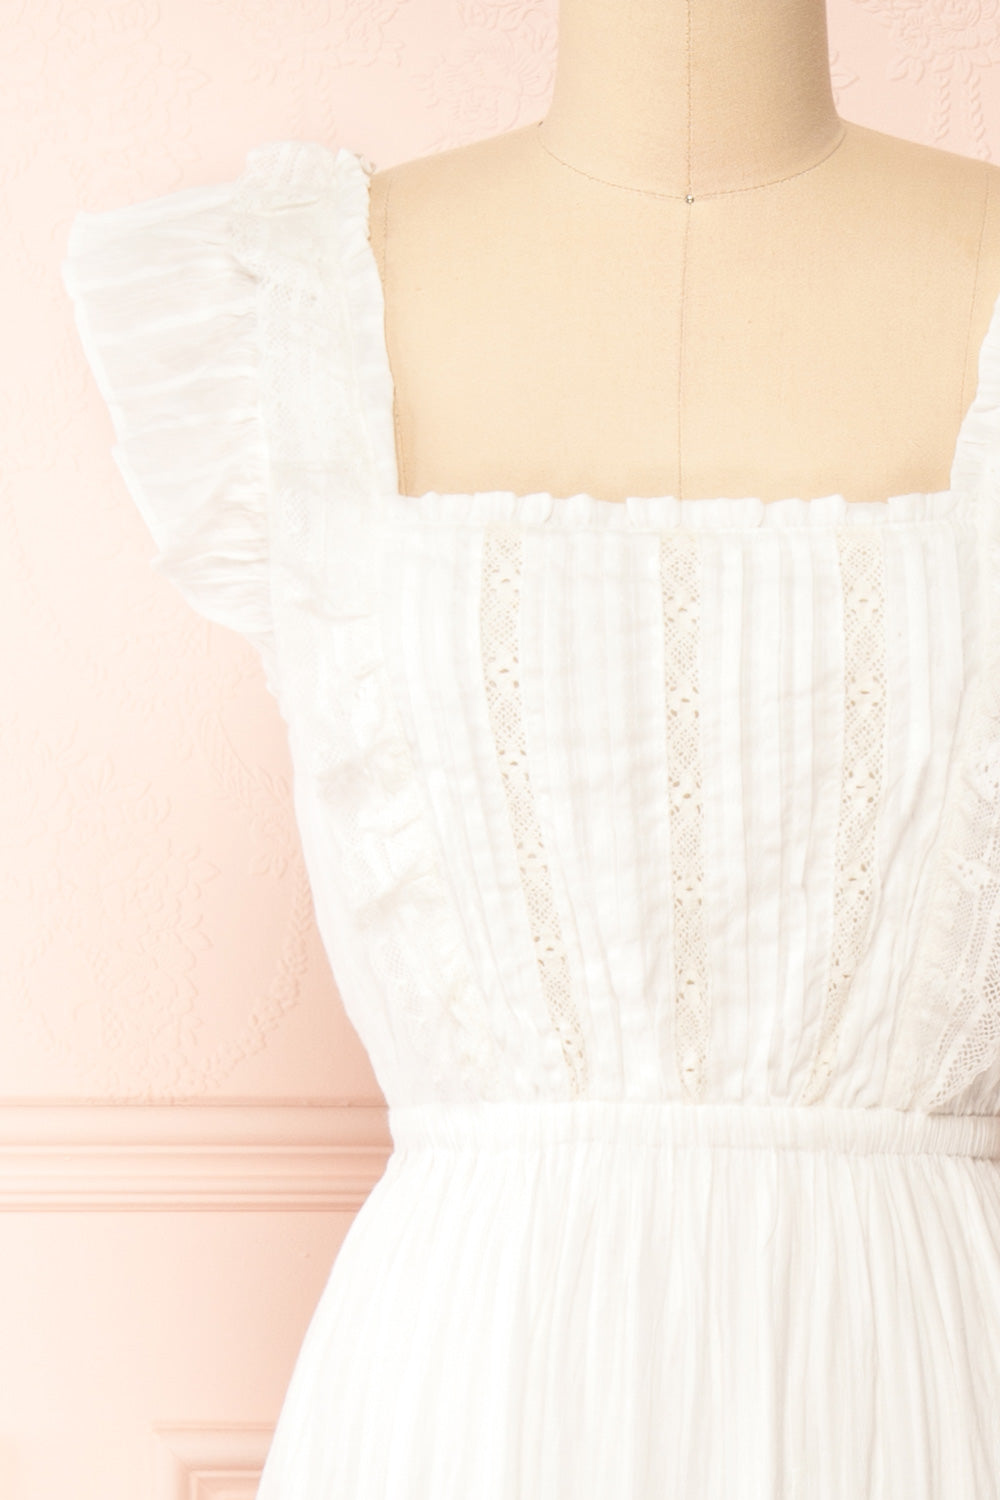 Leonora Ivory Midi Dress w/ Ruffles & Lace | Boutique 1861 front close-up